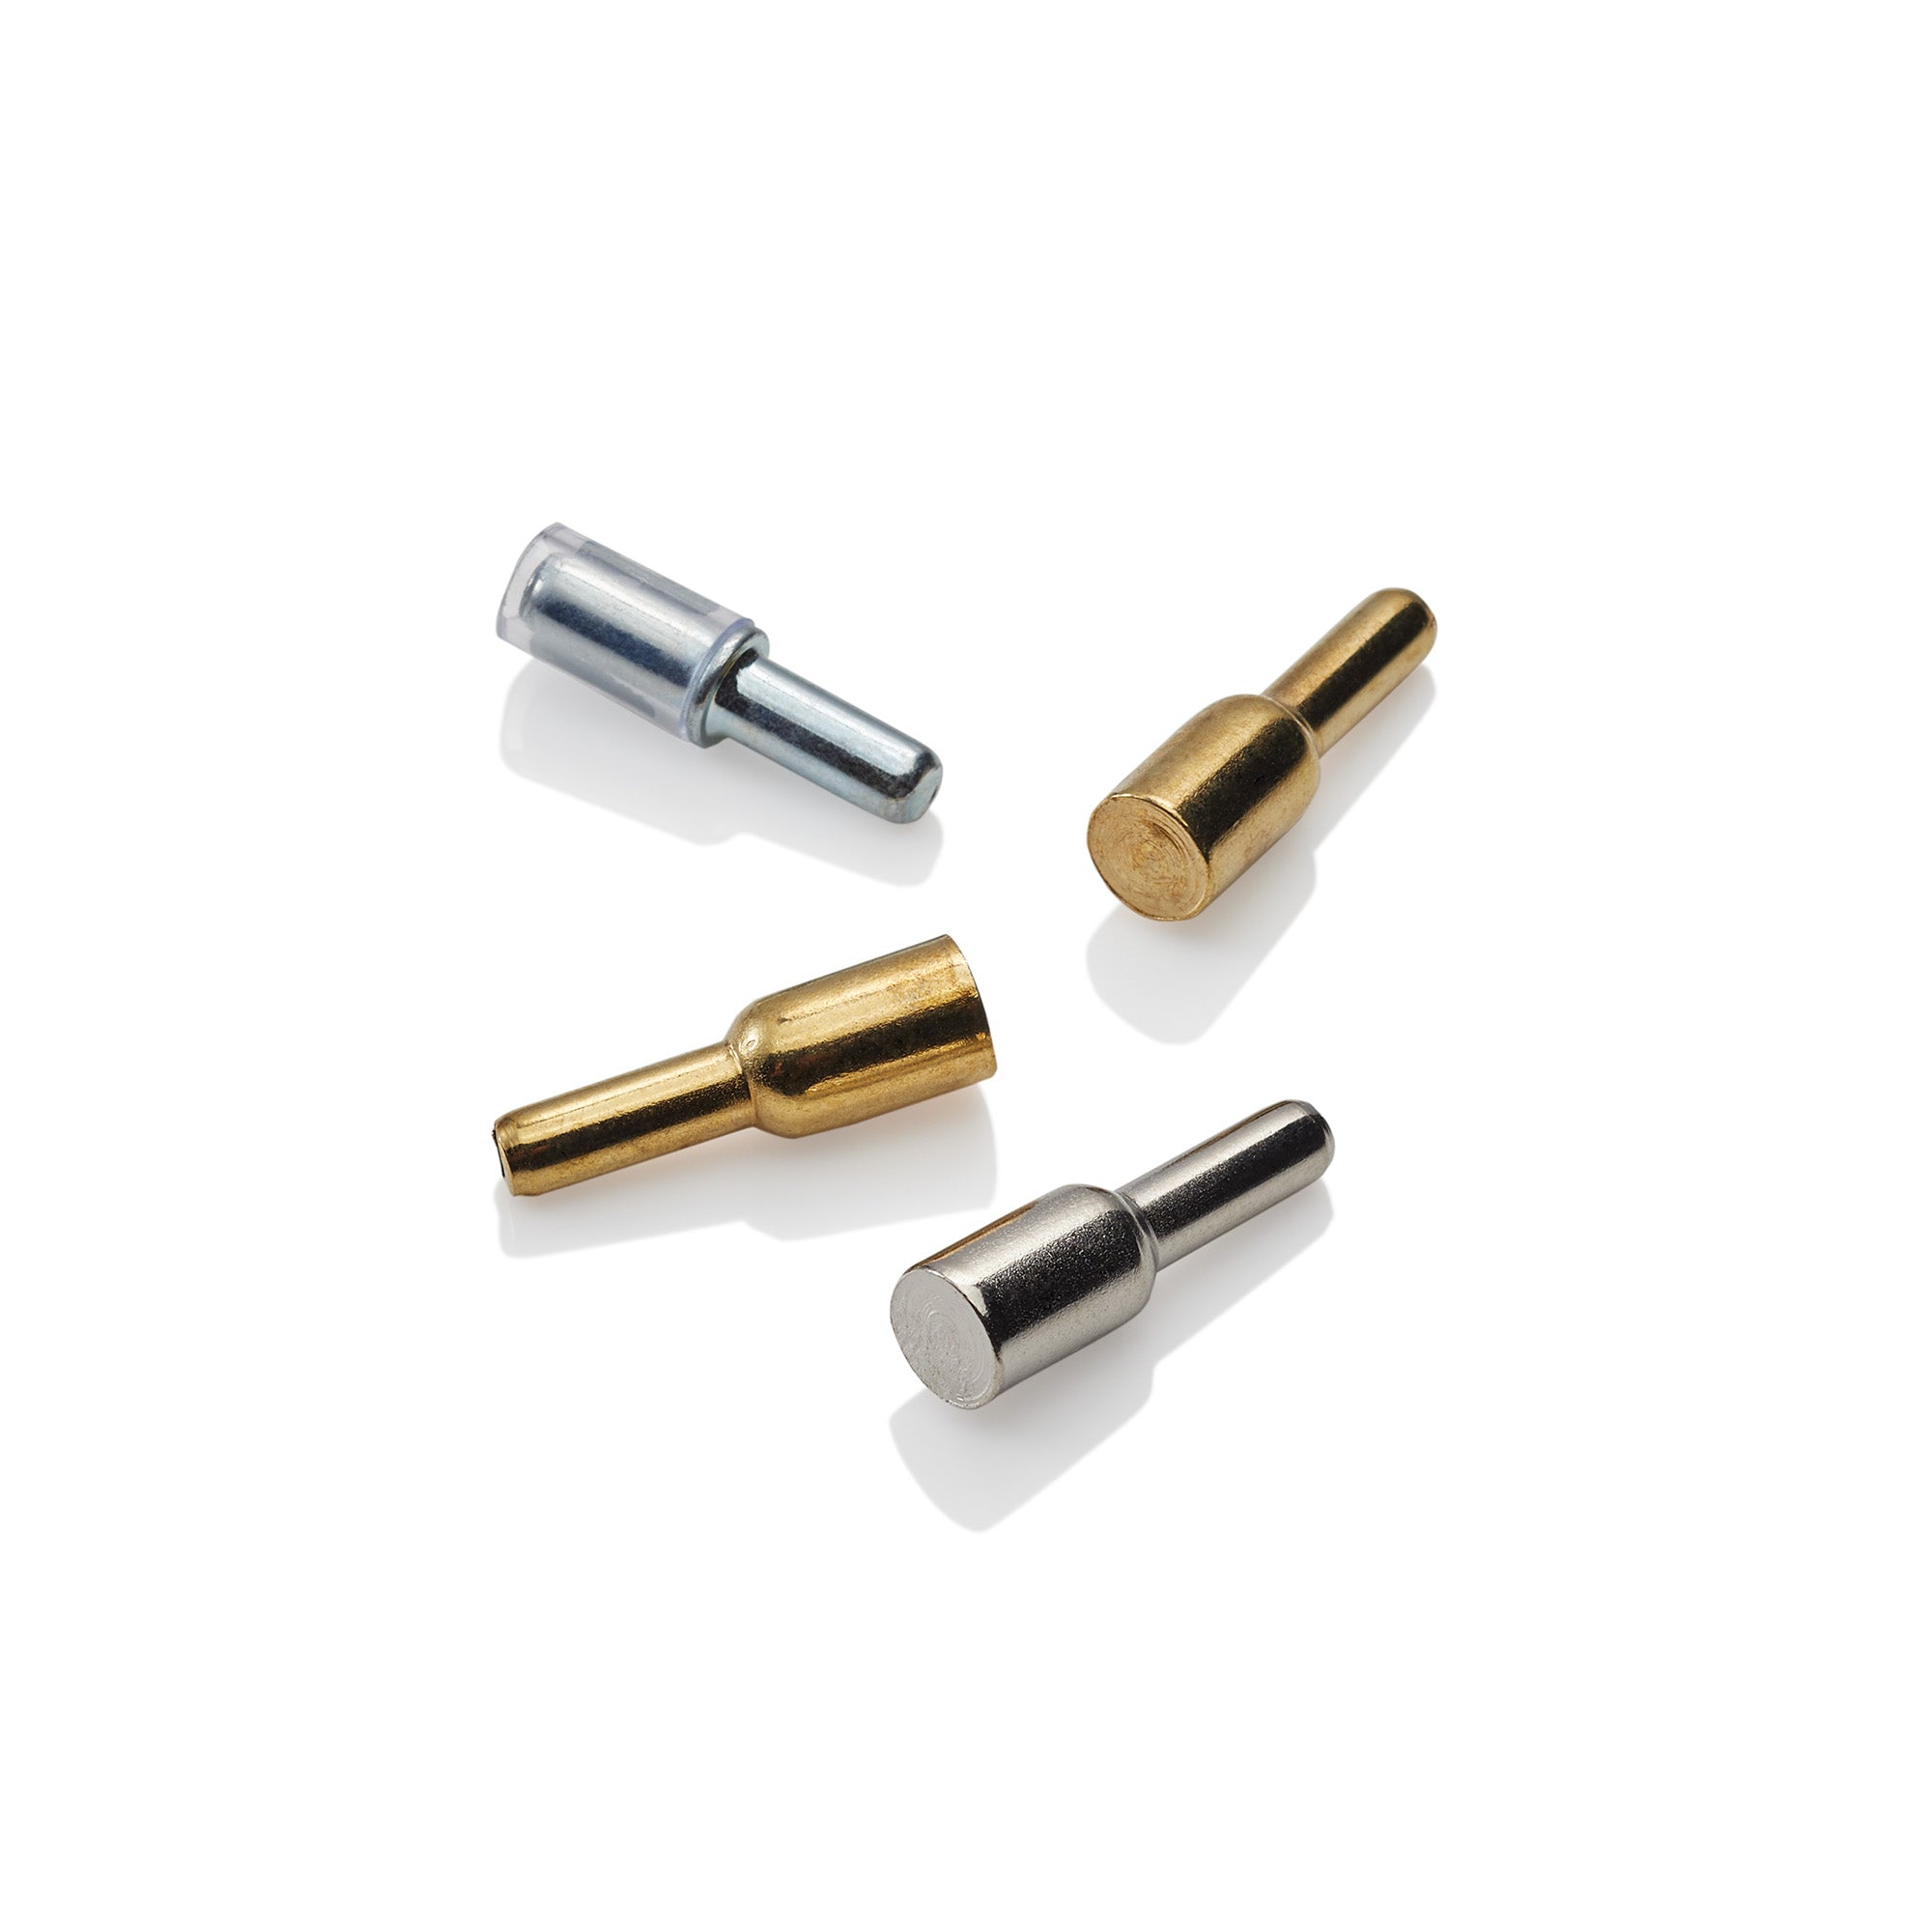 3mm Shelf Pins | WidgetCo